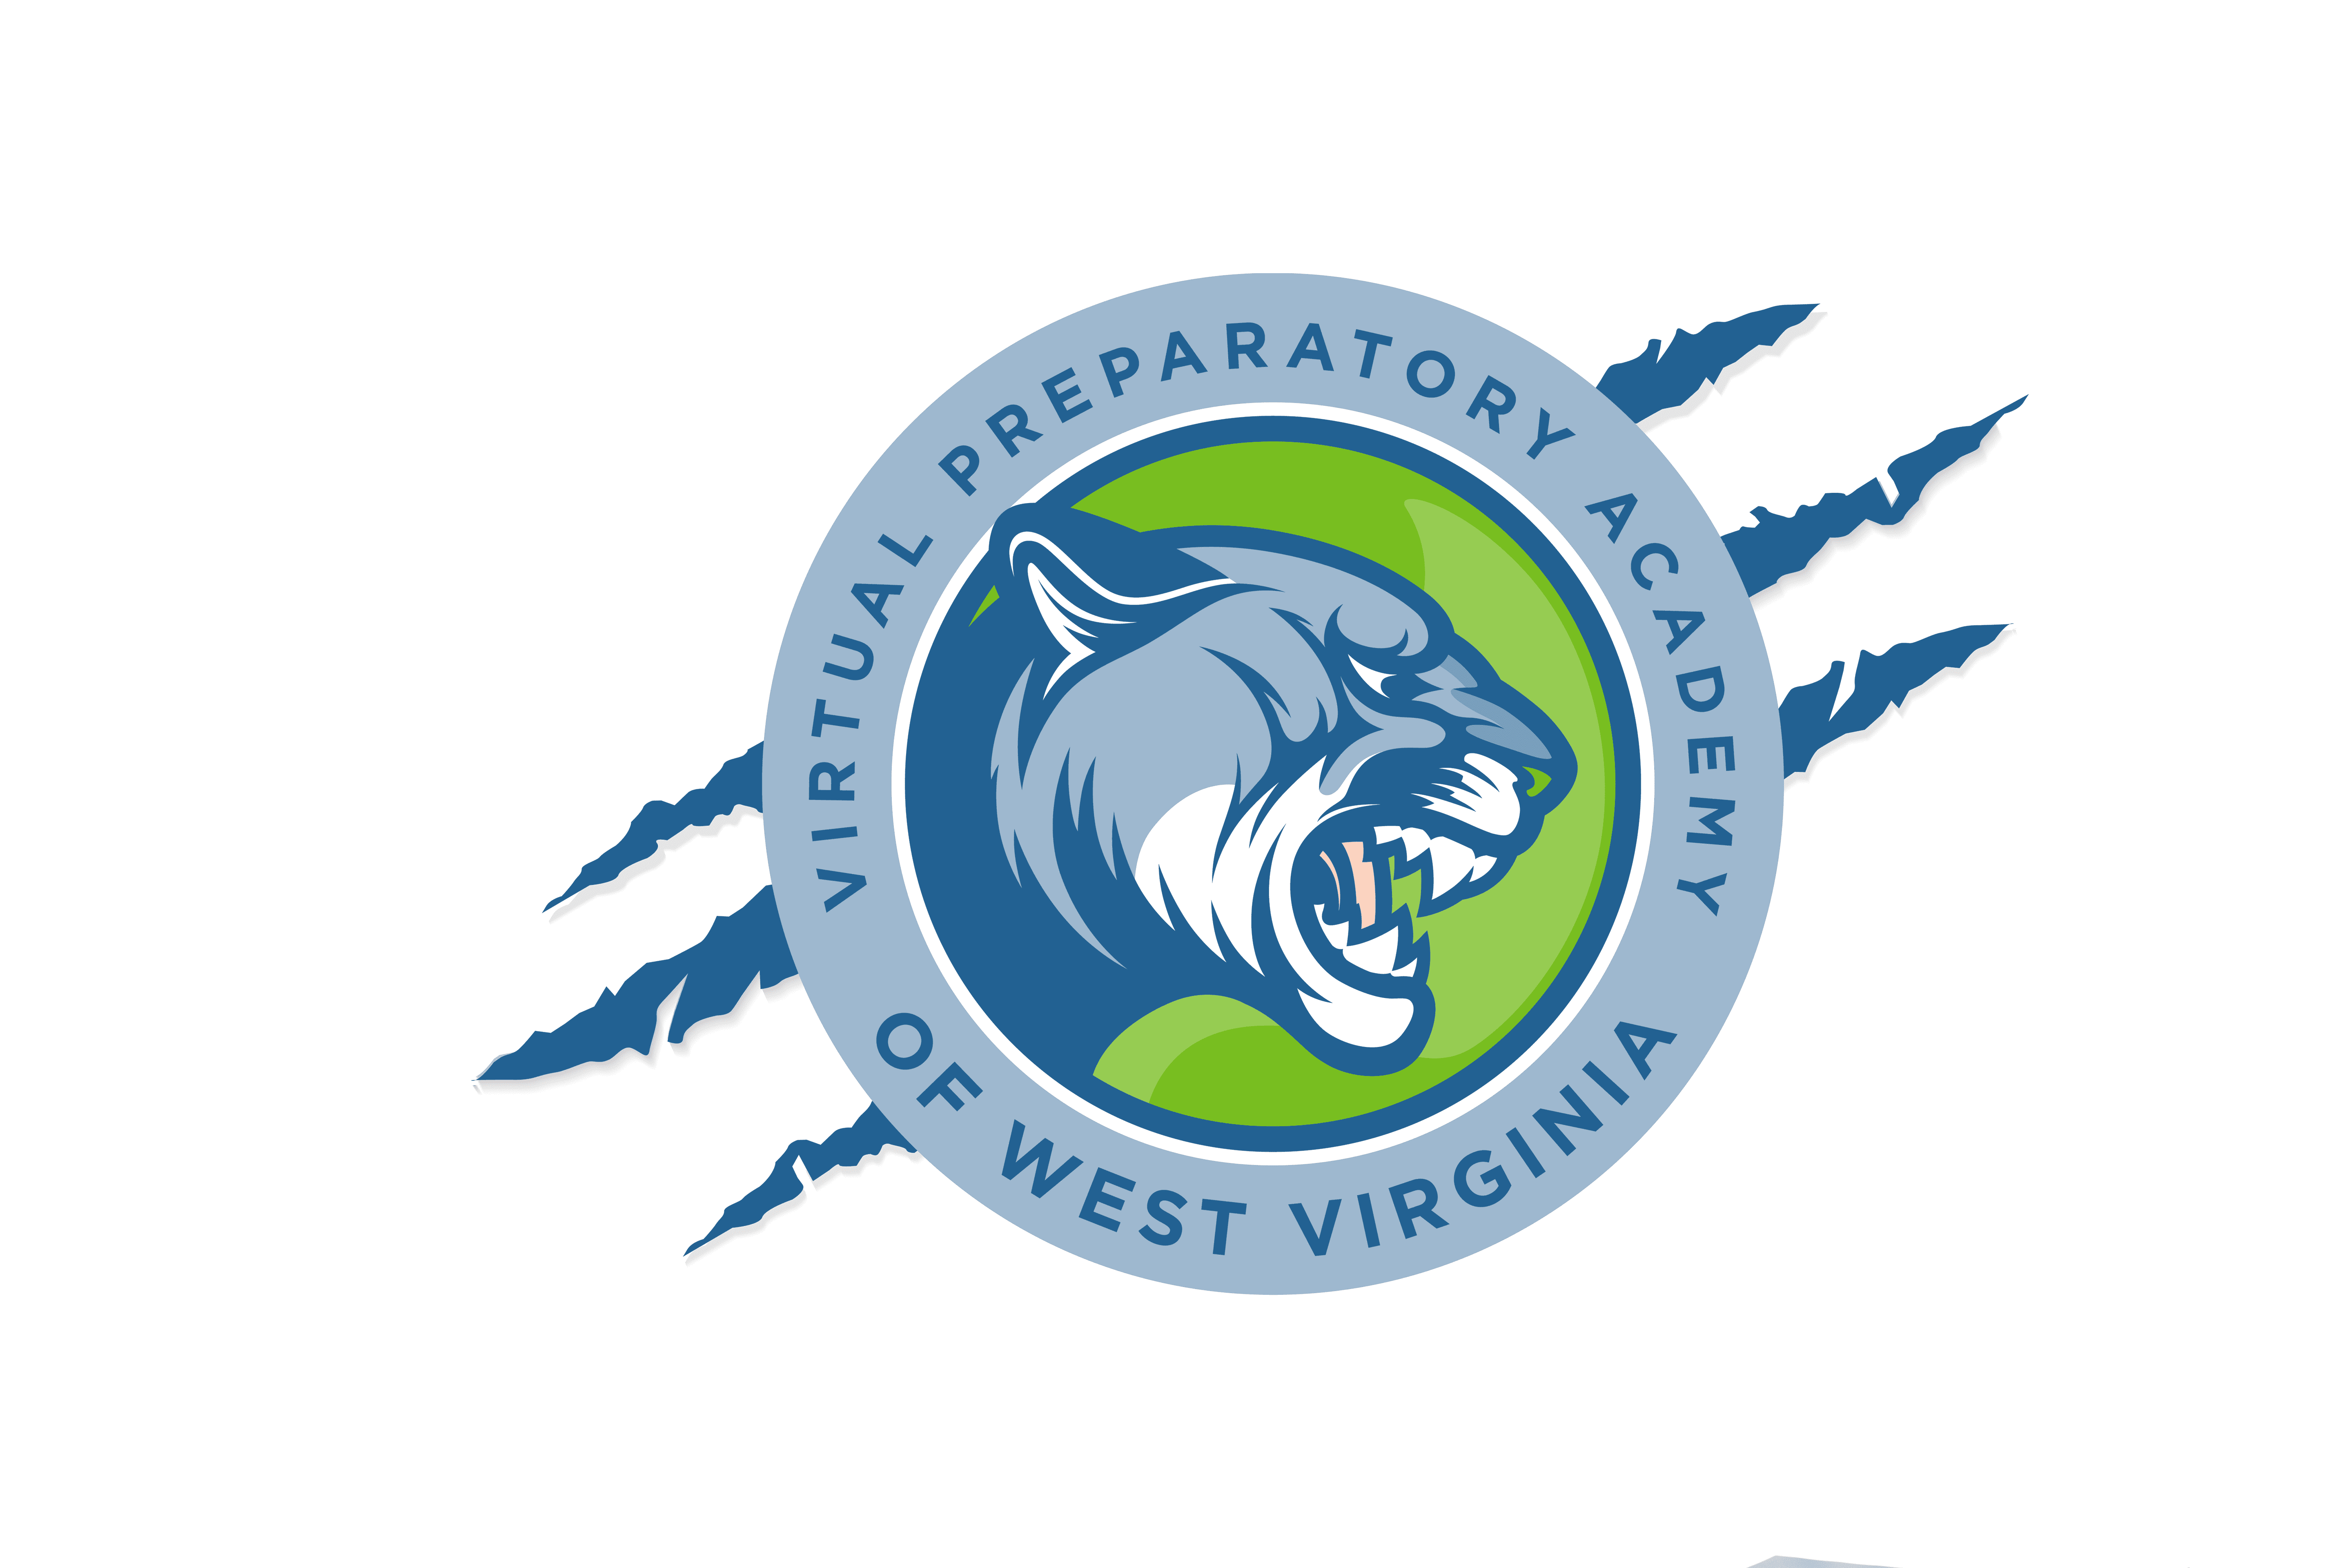 Virtual Prep of West Virginia logo